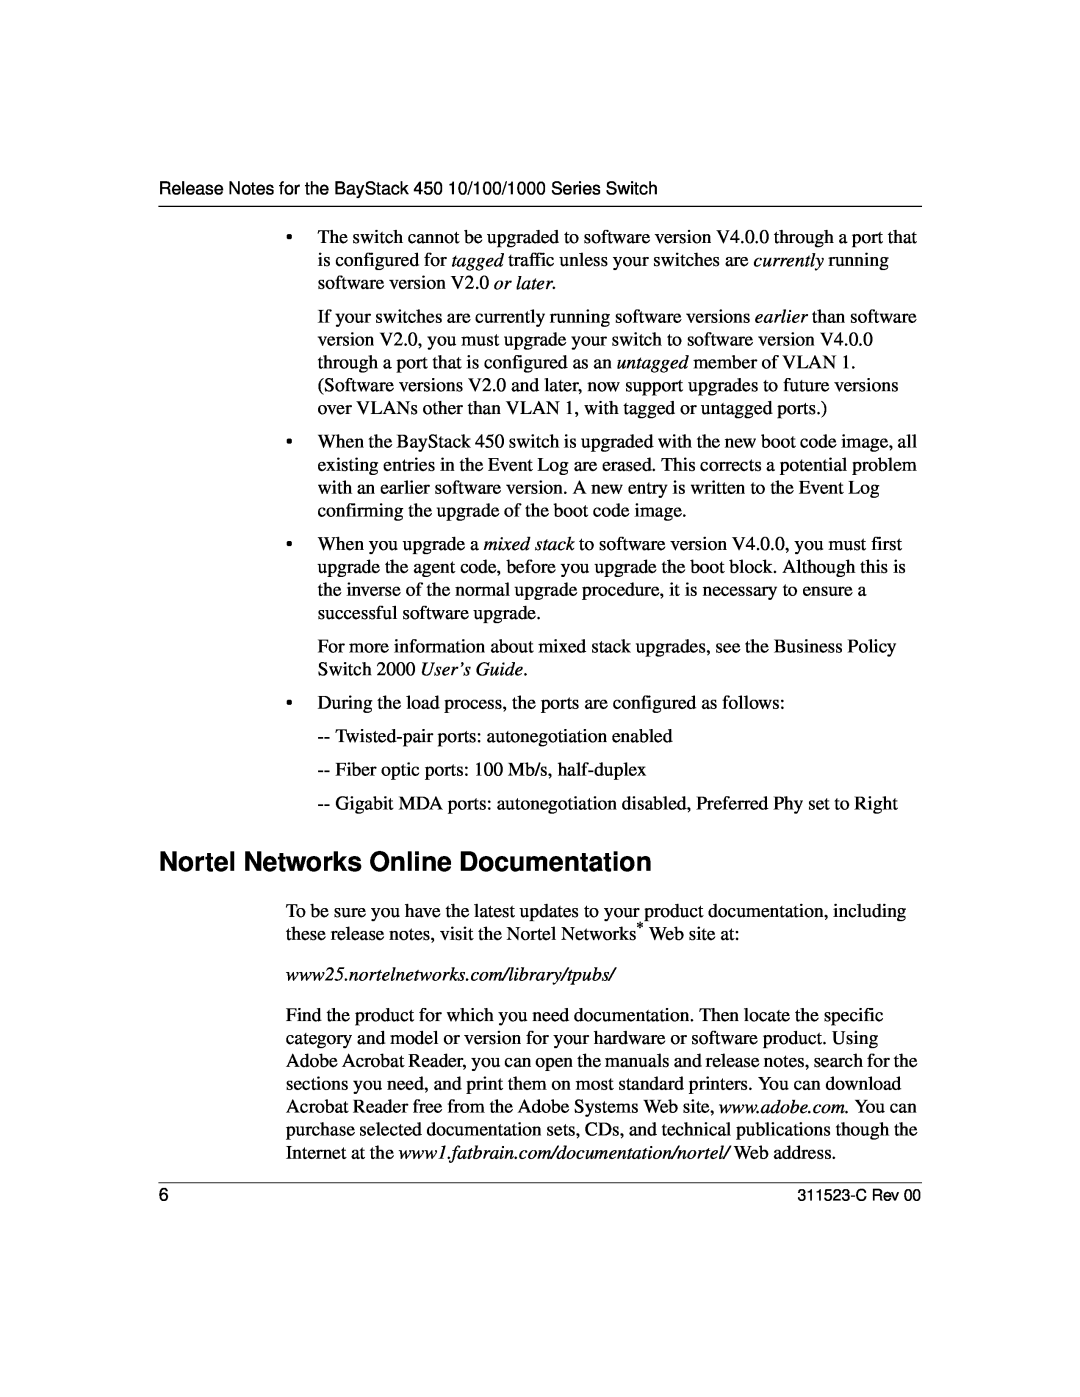 Nortel Networks 100 manual Nortel Networks Online Documentation, www25.nortelnetworks.com/library/tpubs 